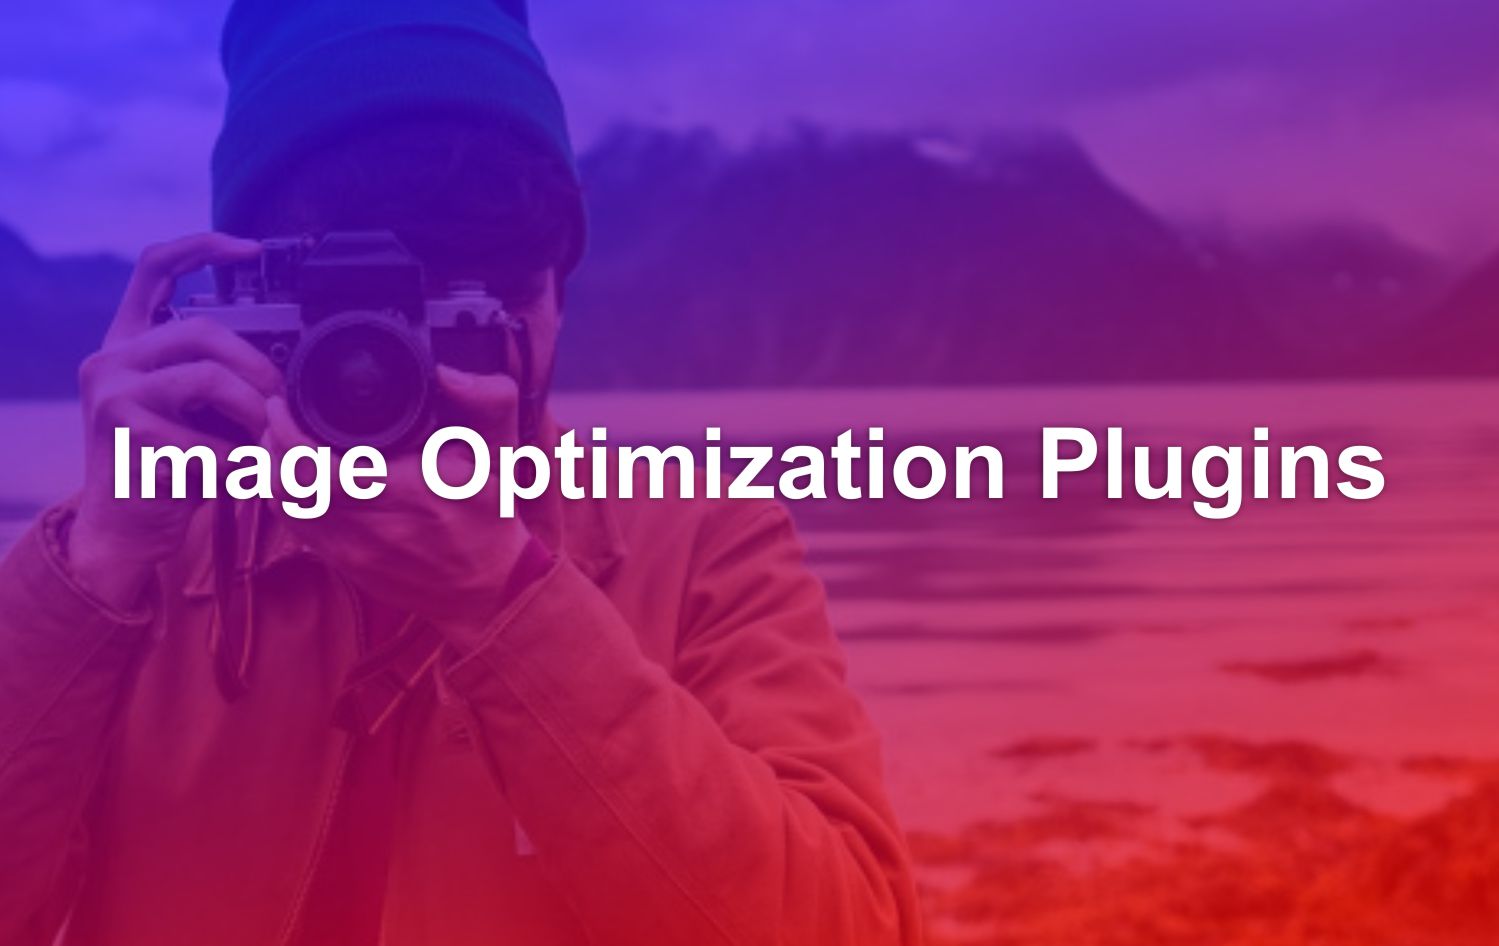 10 Best Image Optimization Plugins for WordPress